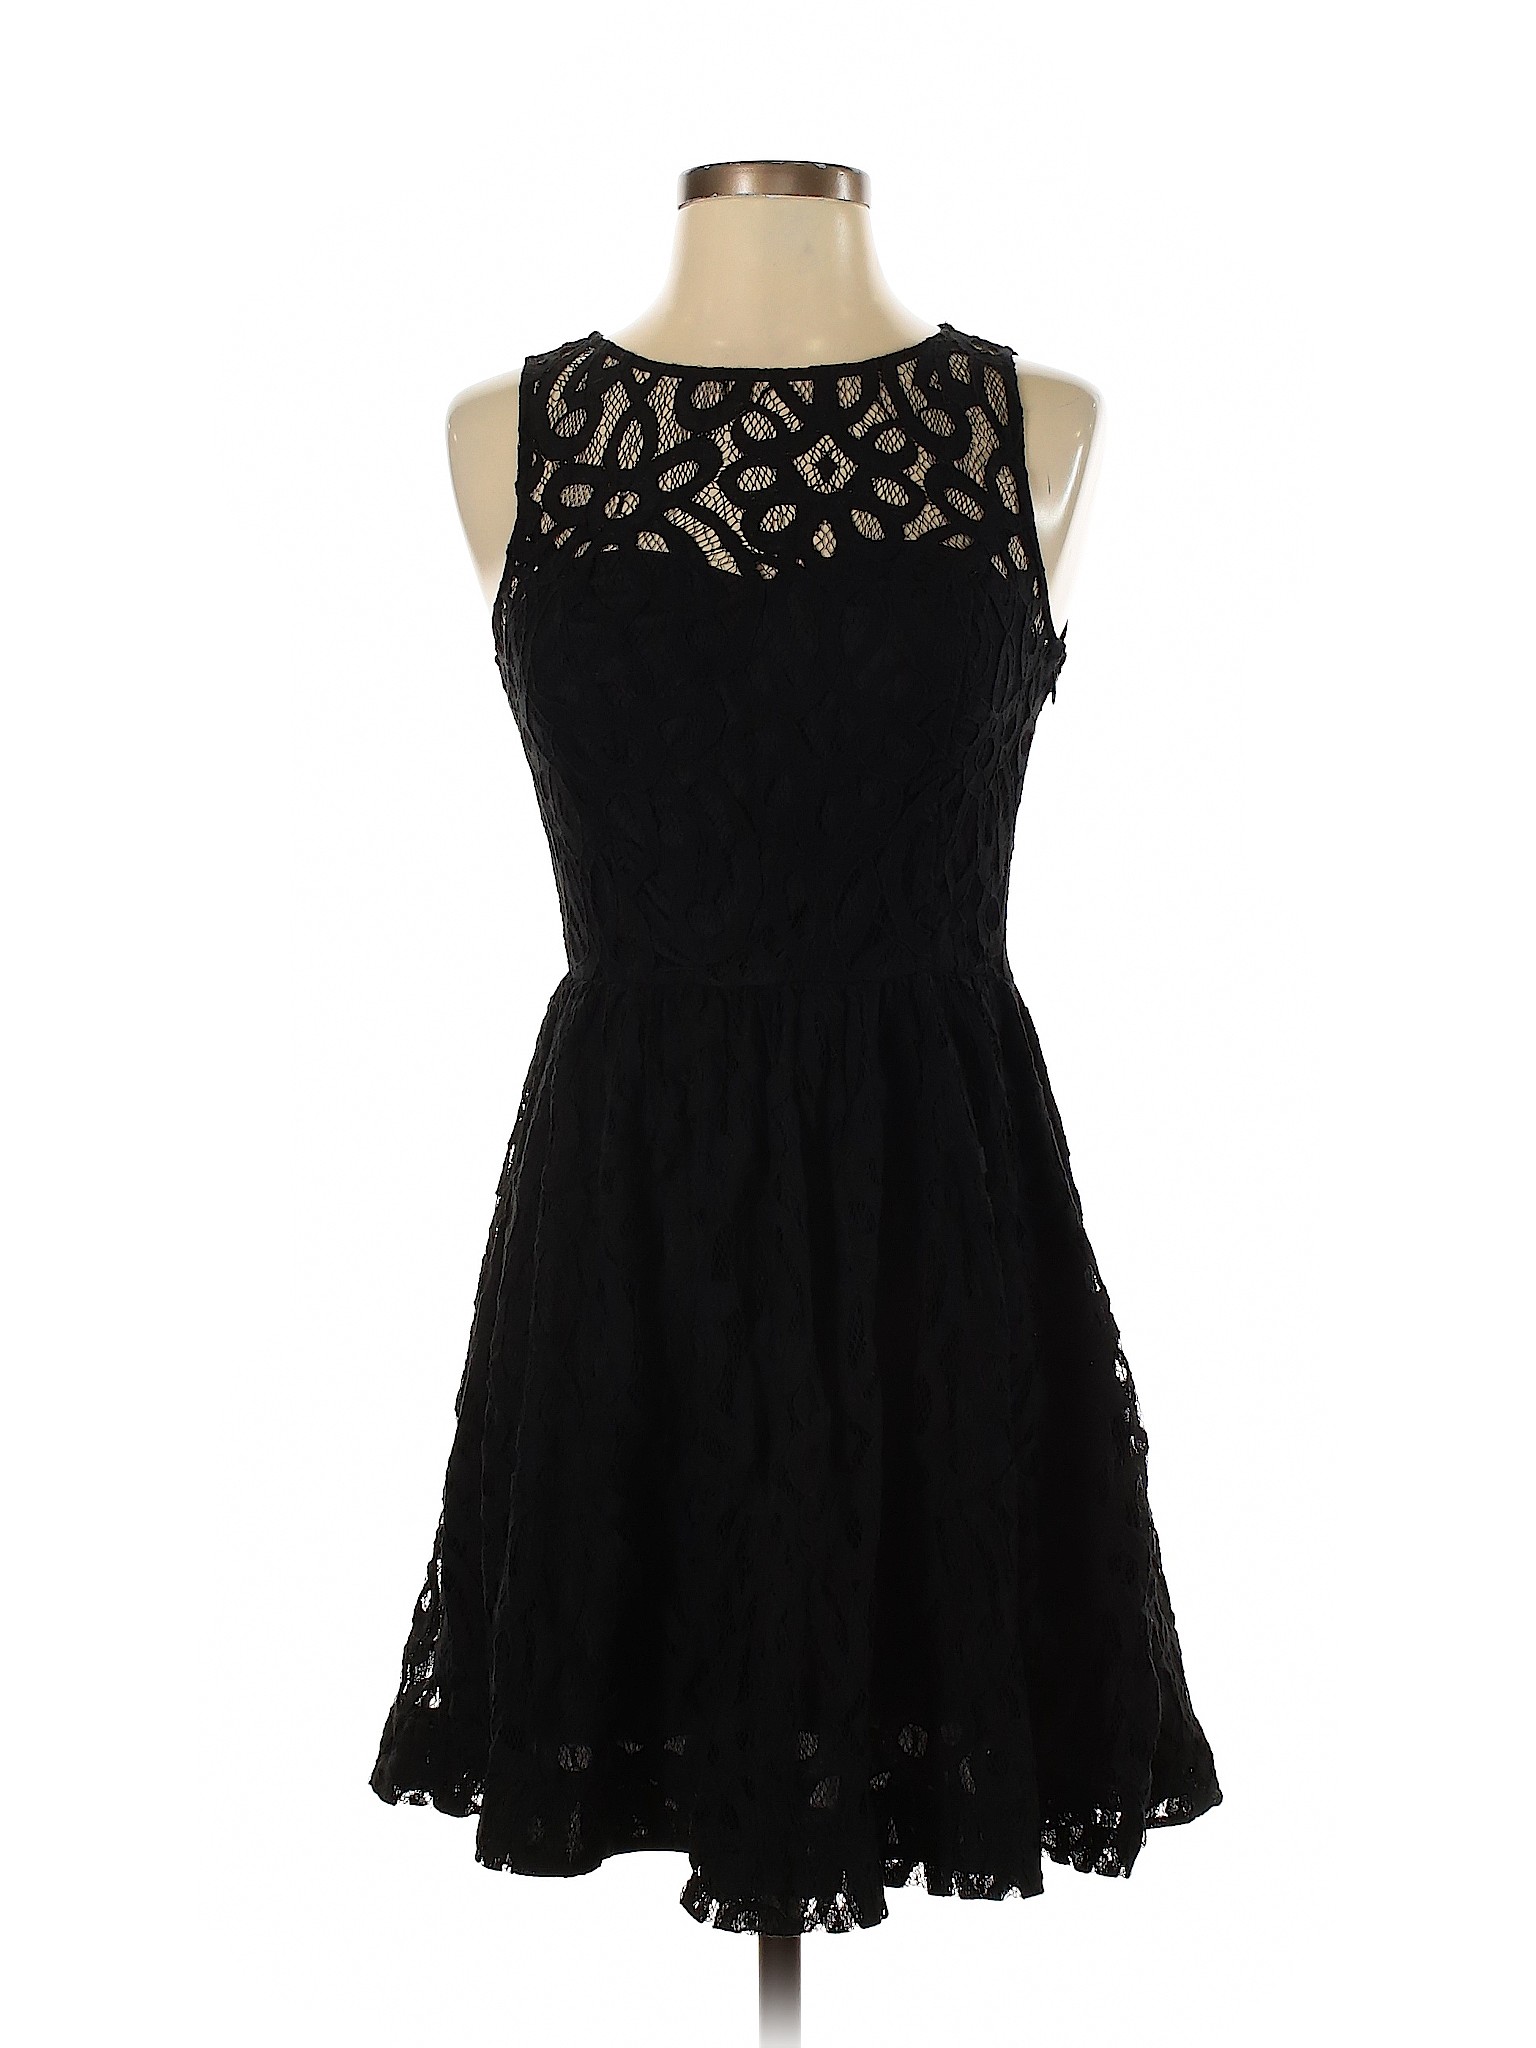 LC Lauren Conrad Women Black Cocktail Dress 4 | eBay